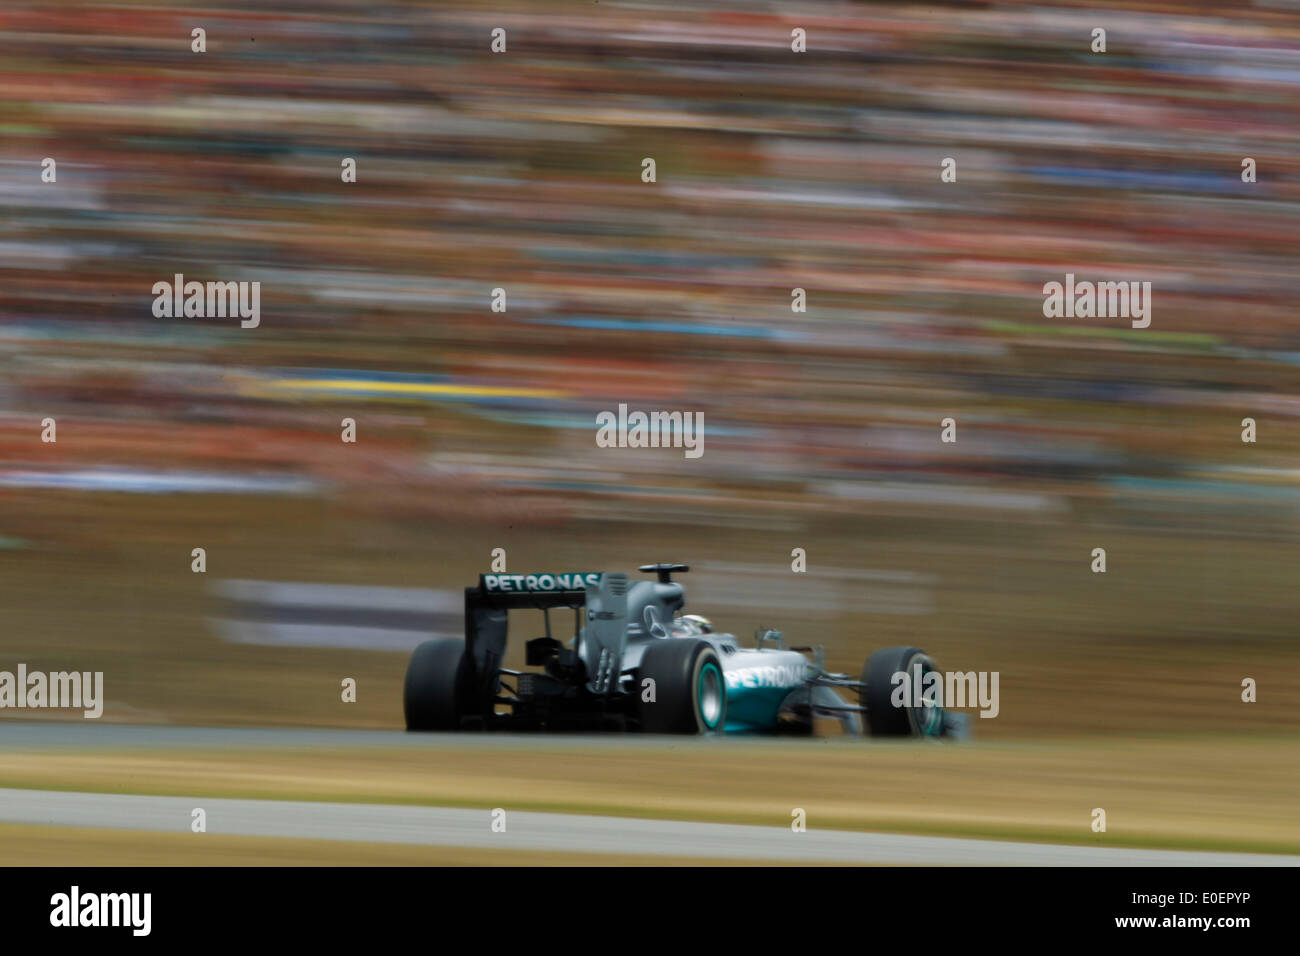 Circuit de Barcelona-Catalunya, Barcelona, Spanien. 11. Mai 2014. Grand Prix von Spanien, #44 Lewis Hamilton (GBR, Mercedes AMG Petronas F1 Team), Credit: Dpa picture-Alliance/Alamy Live News Stockfoto